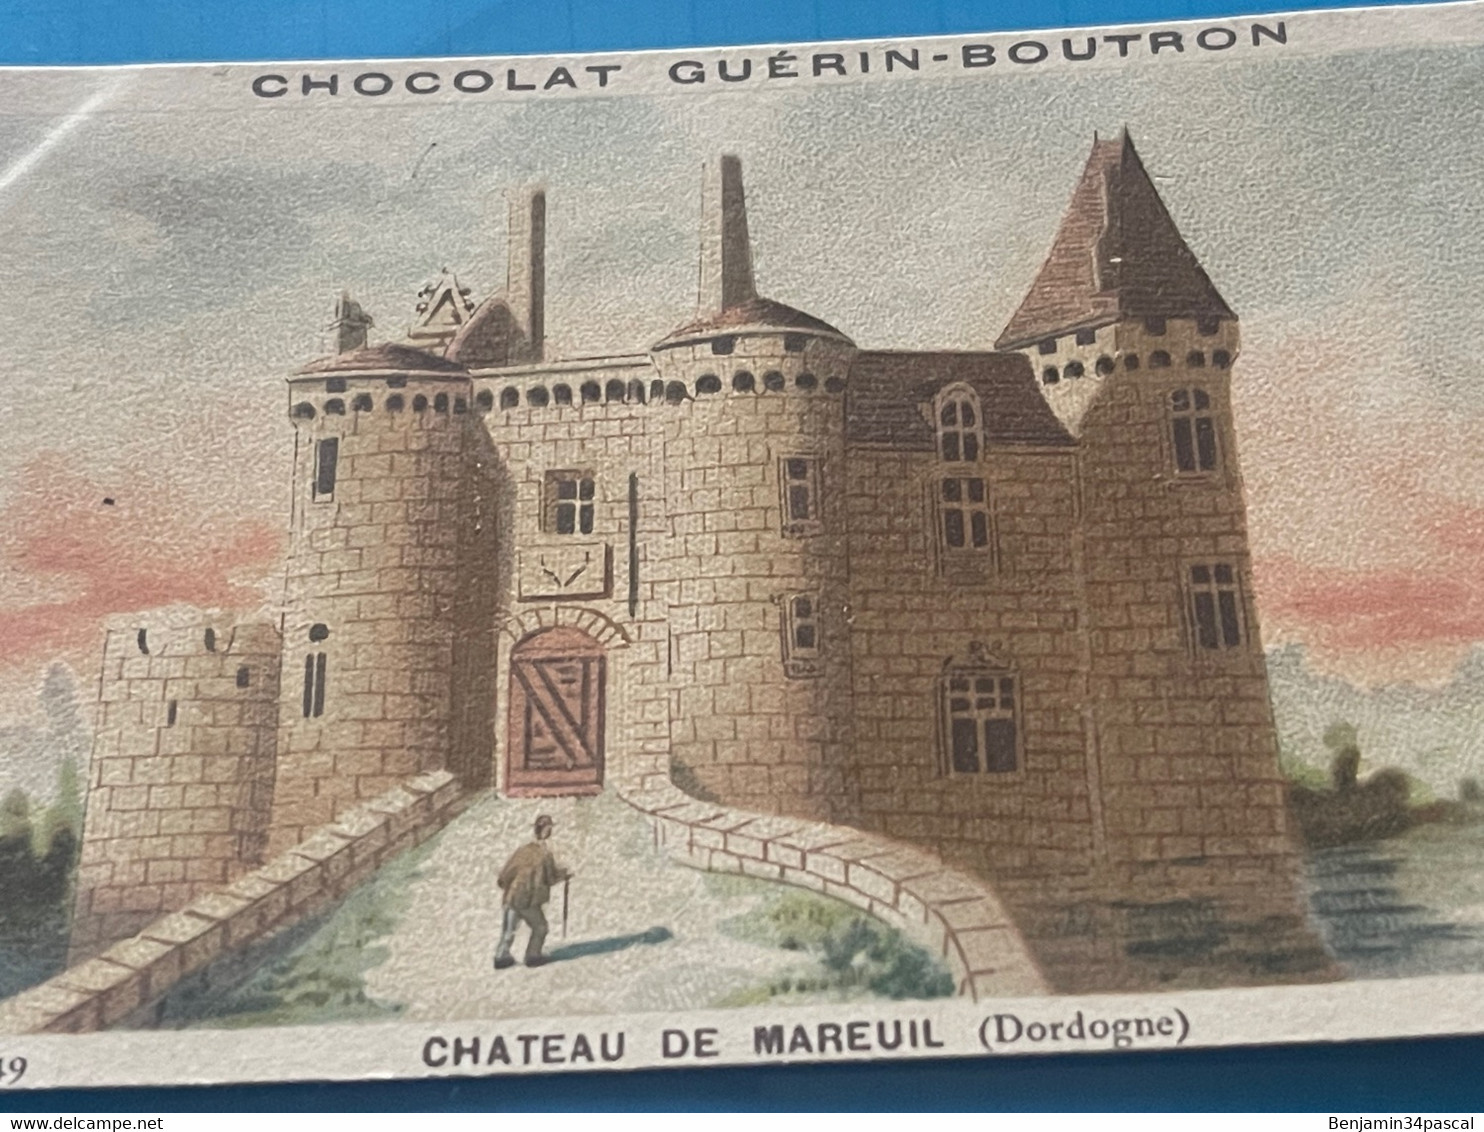 Chocolat GUÉRIN-BOUTRON Image -Chromo Ancienne - Château De Mareuil ( Dordogne ) - Chocolat